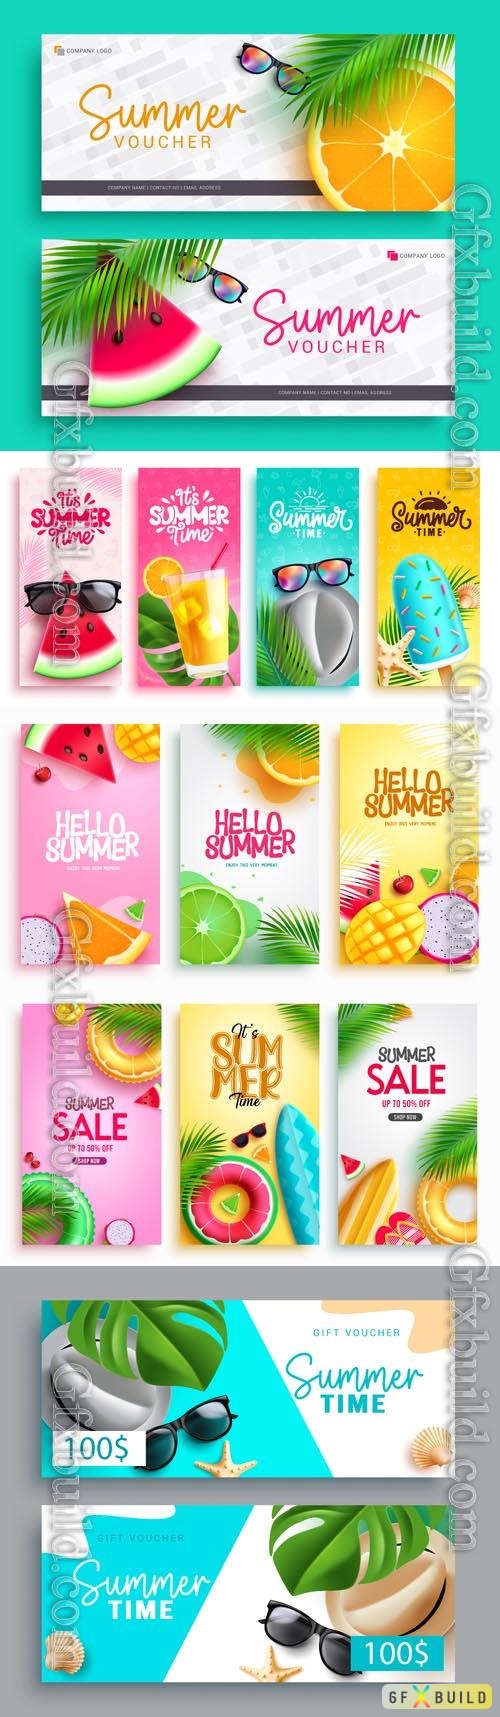 Summer poster vector set, summer sale offer discount